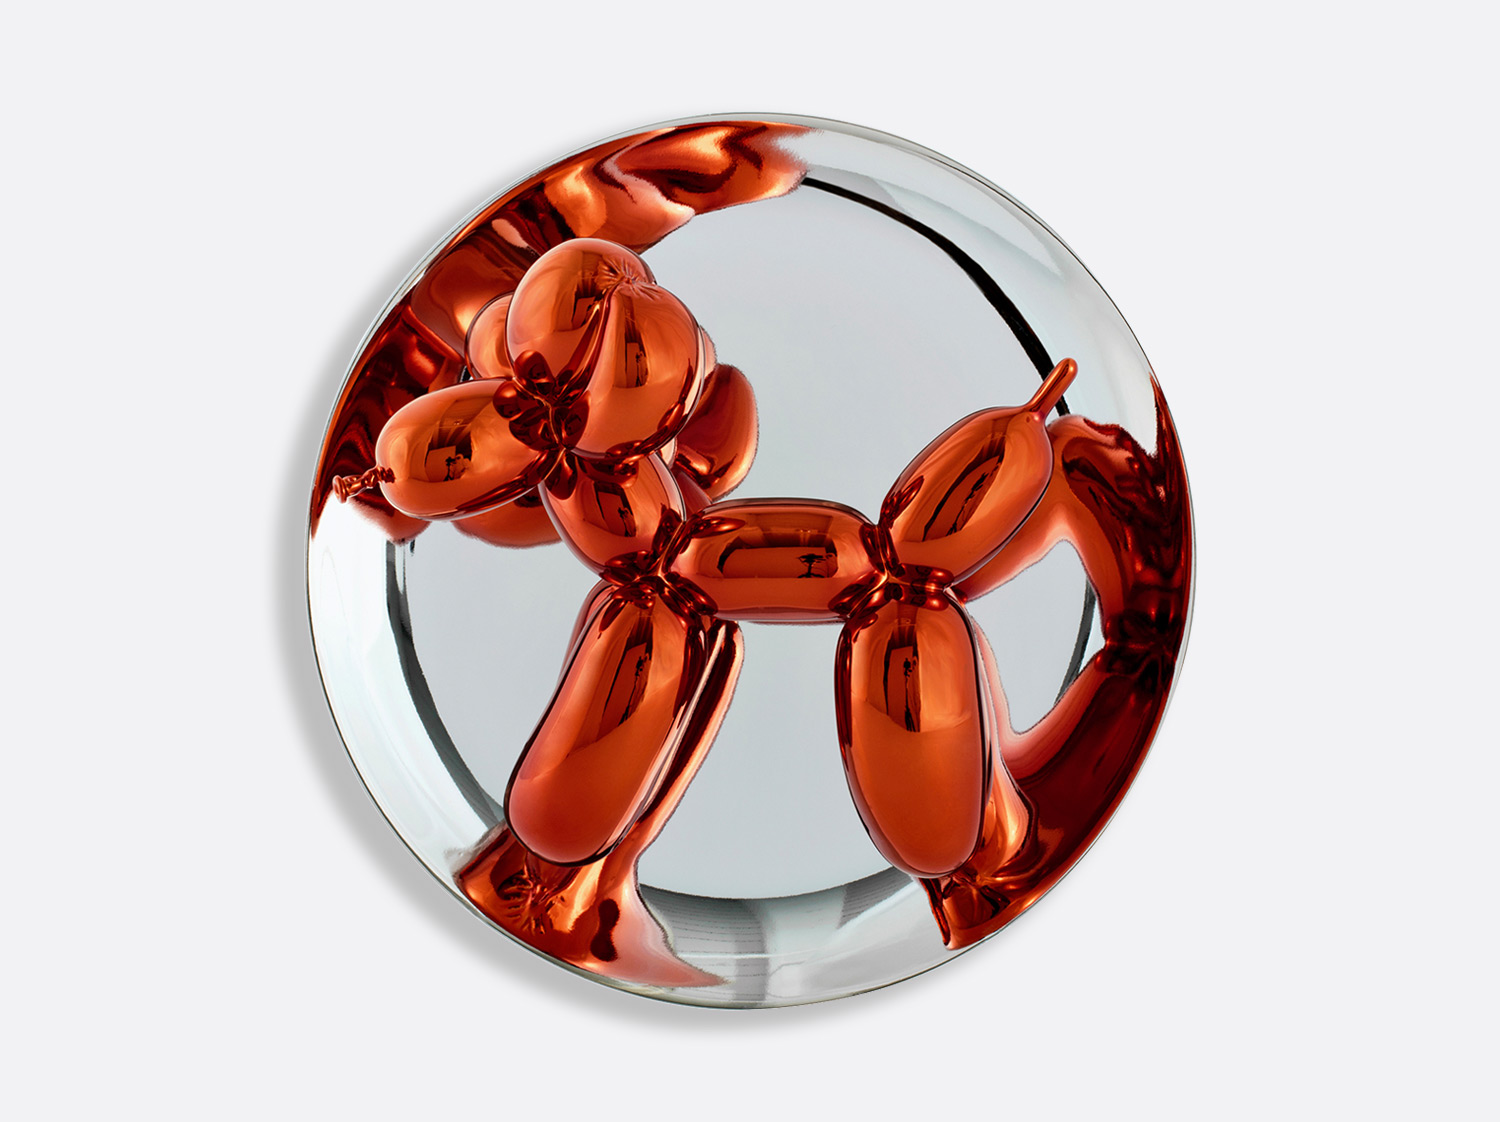 Balloon Dog (Orange) by Jeff Koons en porcelaine de la collection BALLOON DOG (ORANGE) by Jeff Koons Bernardaud